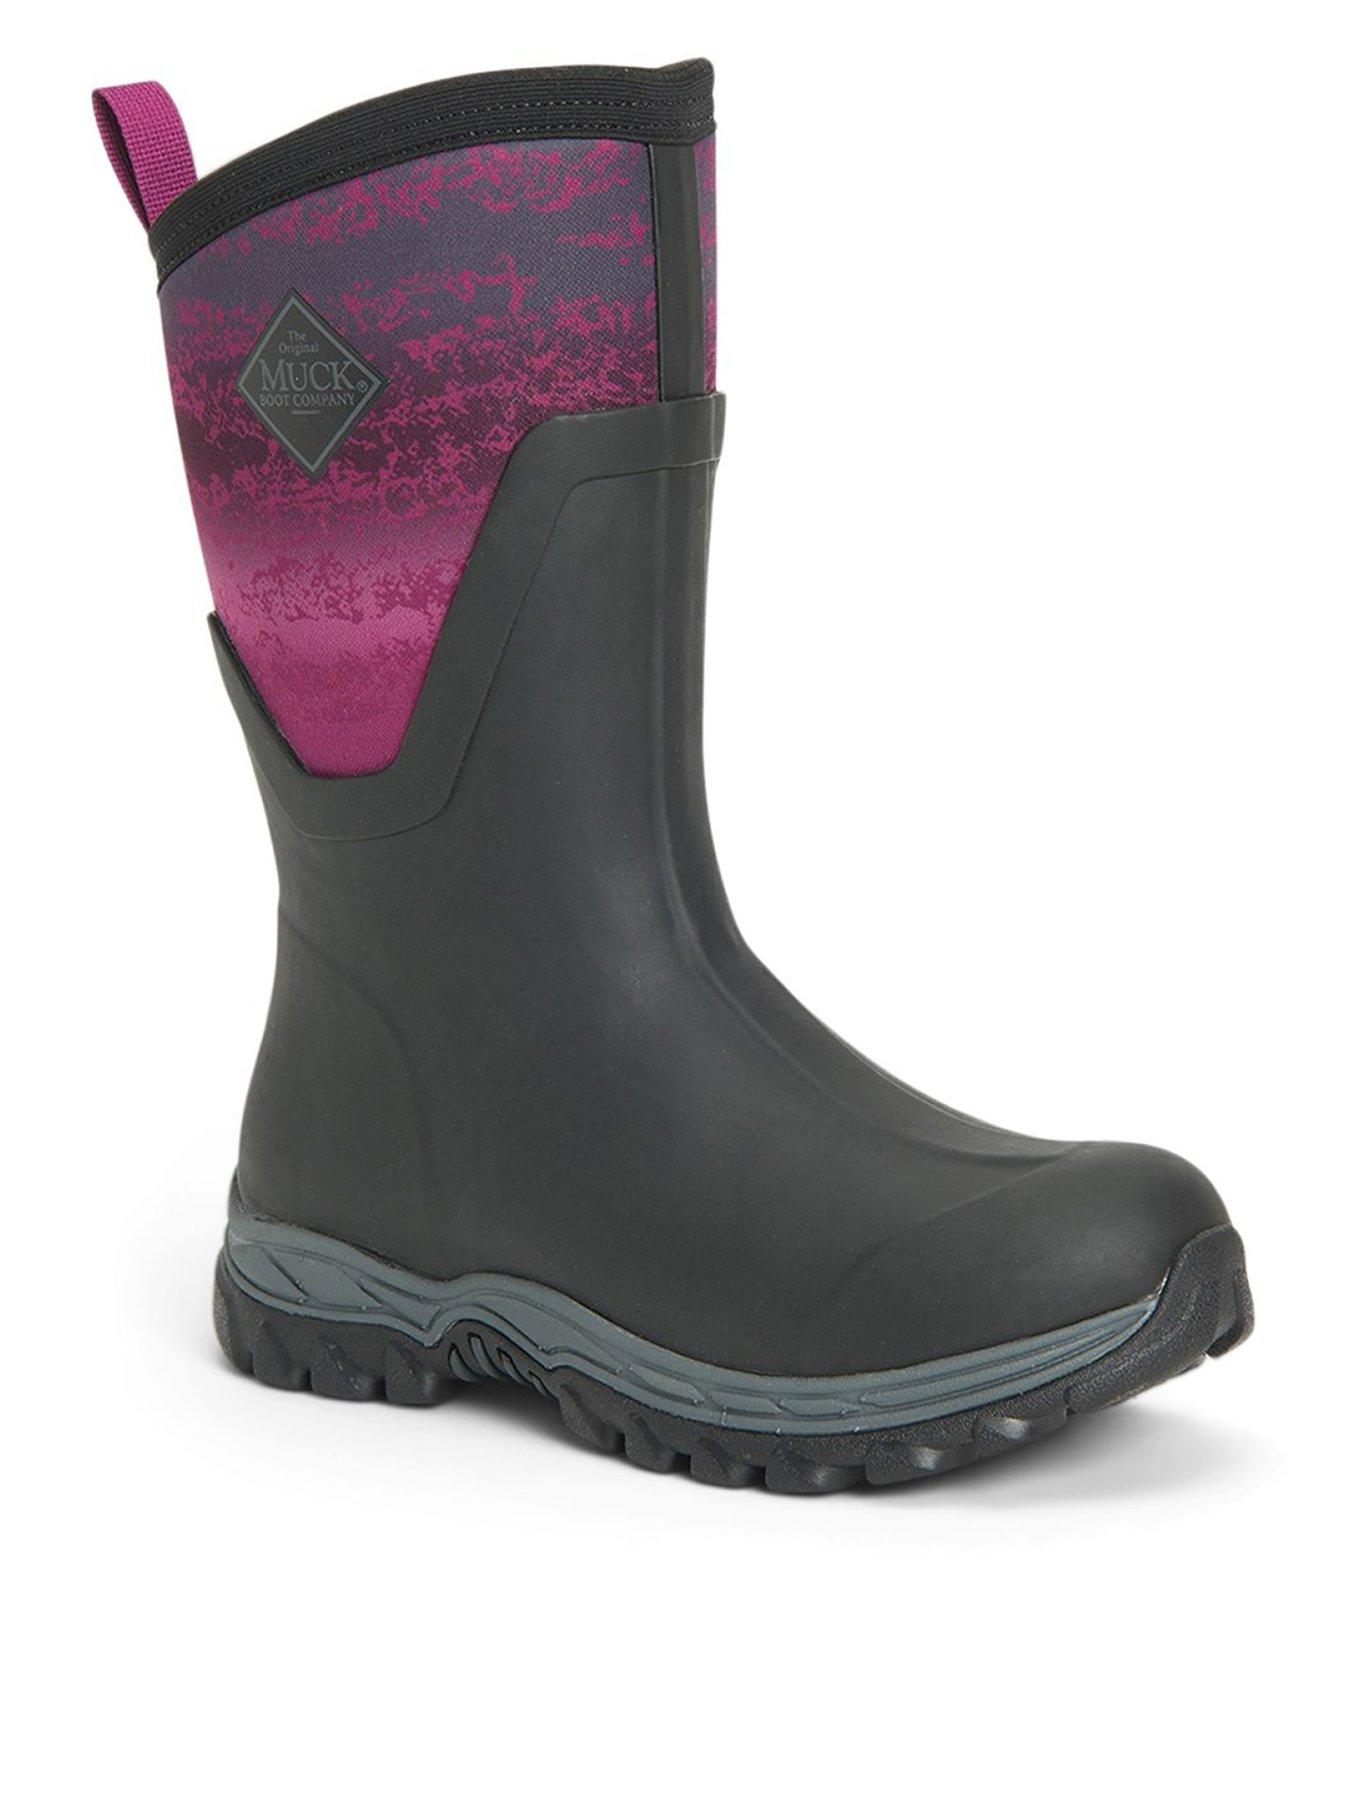 Women Arctic Sport 2 Mid Wellington Boots - Black/Pink